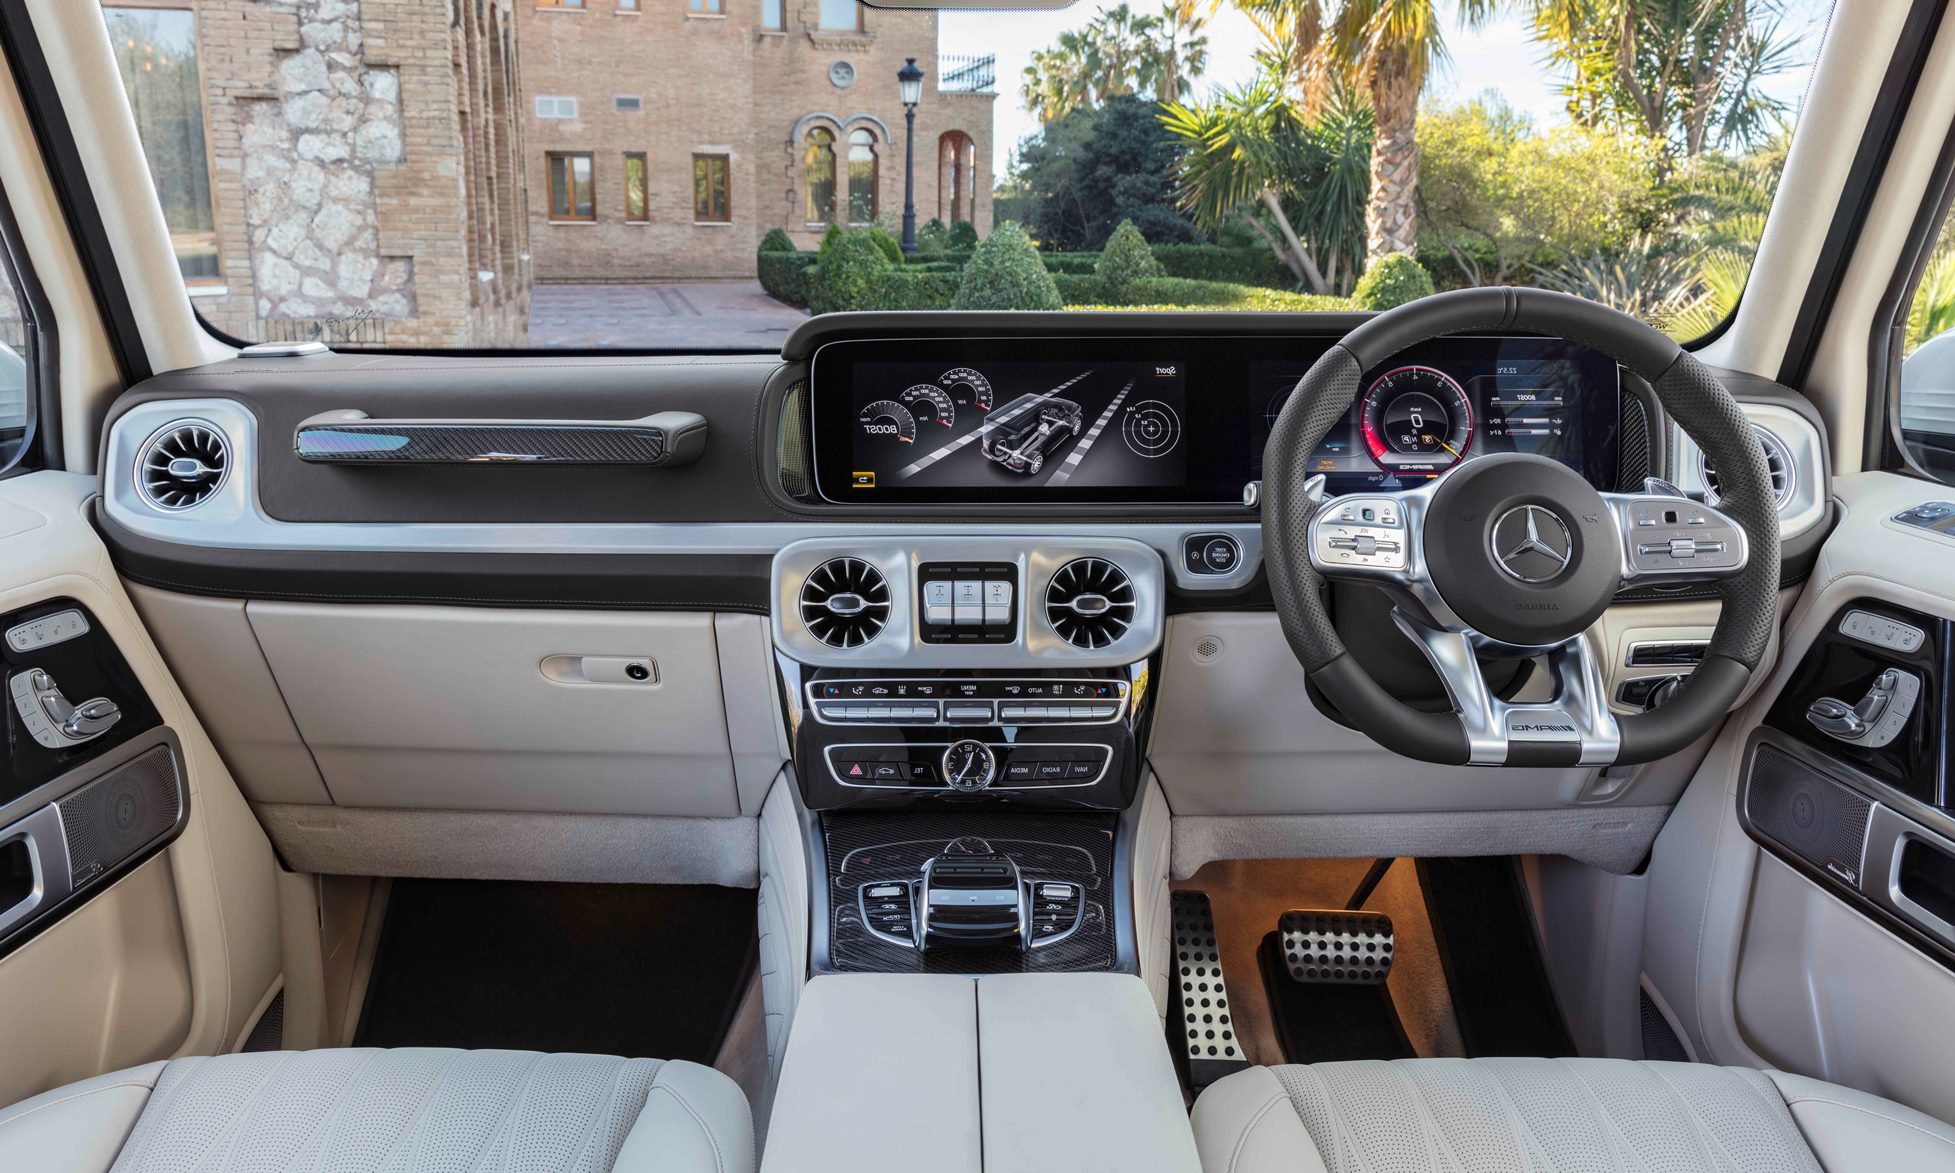 Mercedes-AMG G63 interior